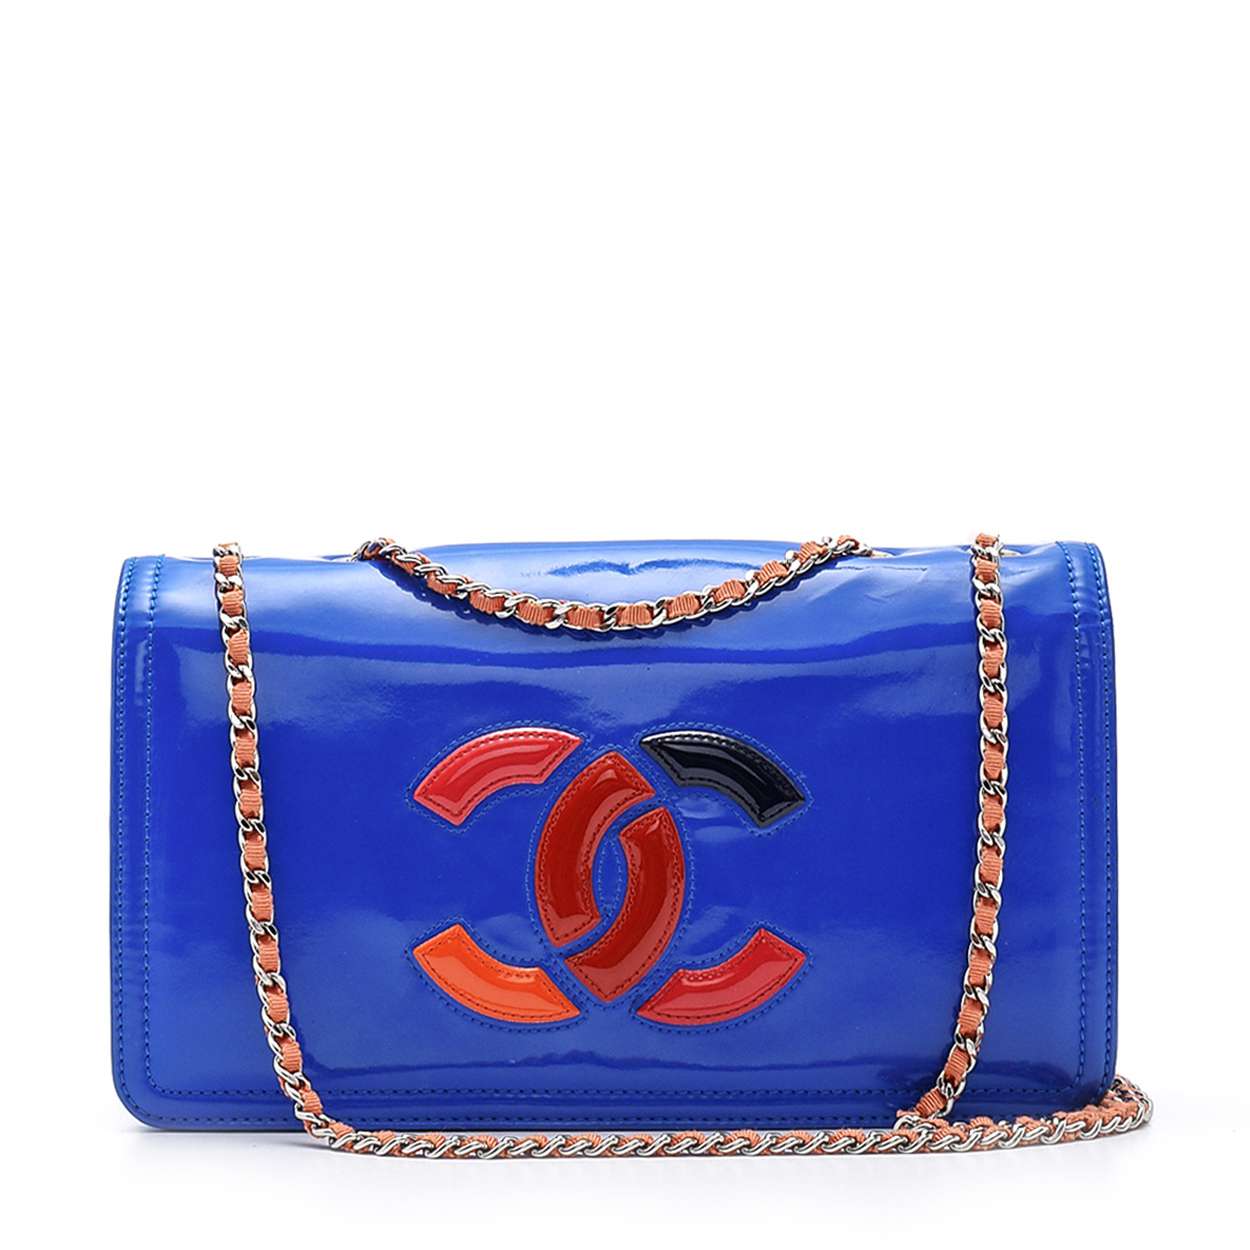 Chanel - Blue Patent Leather Lipstick Flap Bag